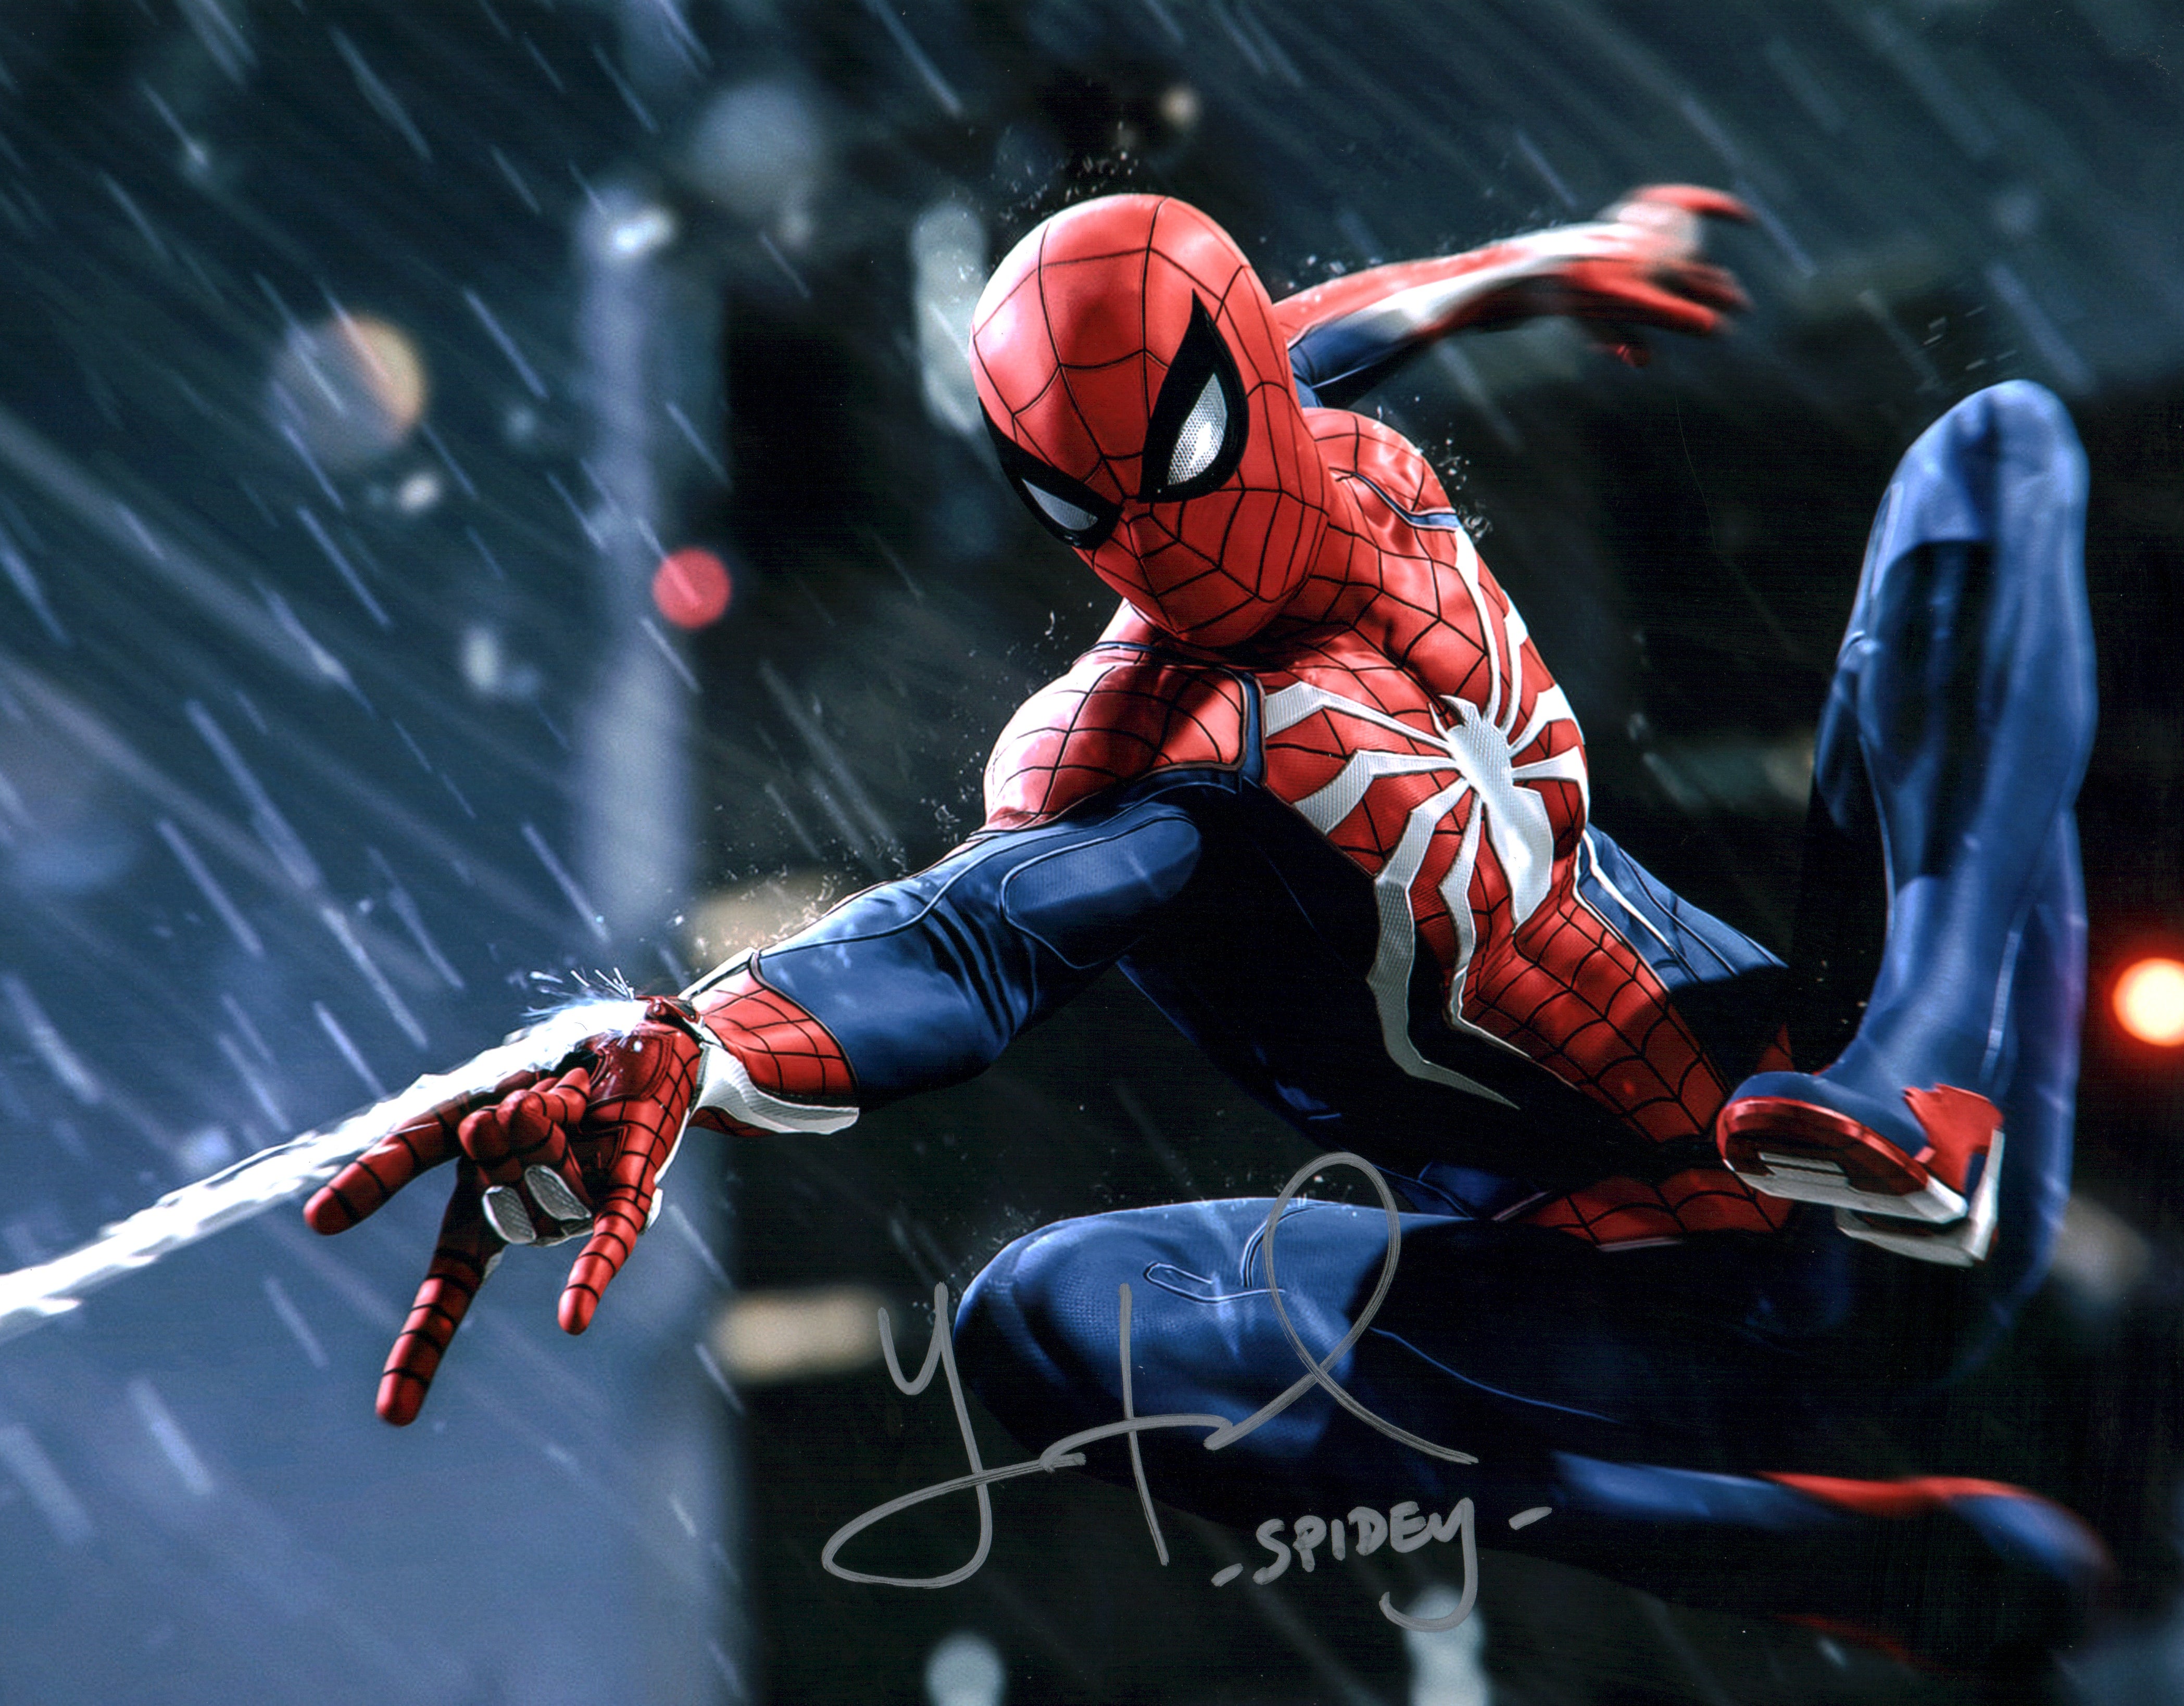 Yuri Lowenthal Spider-Man 11x14 Signed Photo Poster JSA Certified Autograph